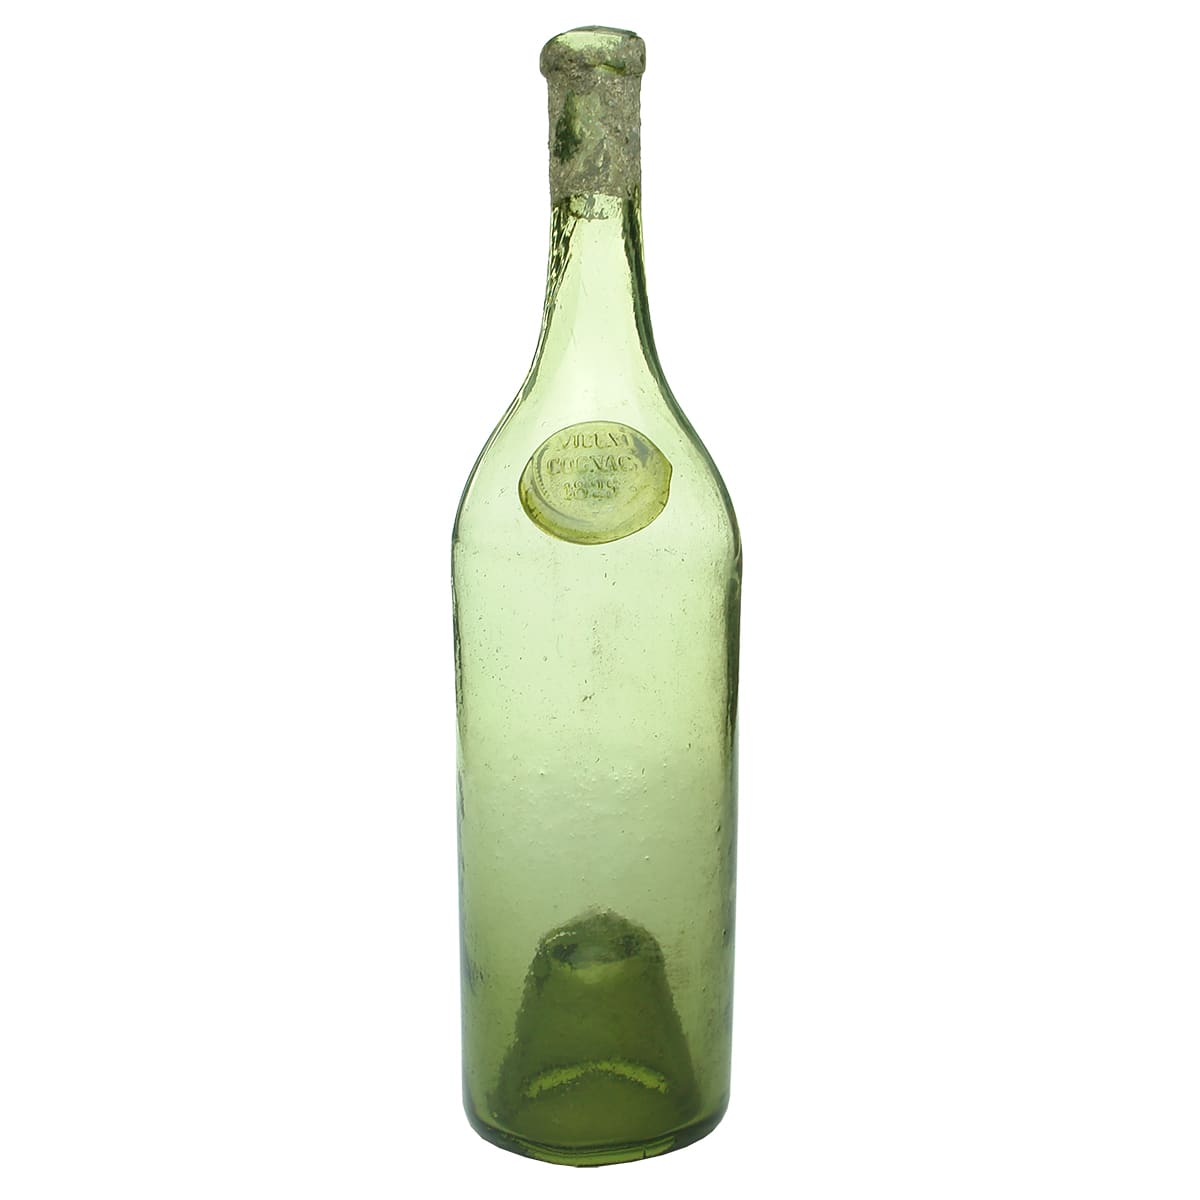 Cognac. Vieux Cognac 1825. (Seal Glued on appropriate bottle). Olive Green. 26 oz.